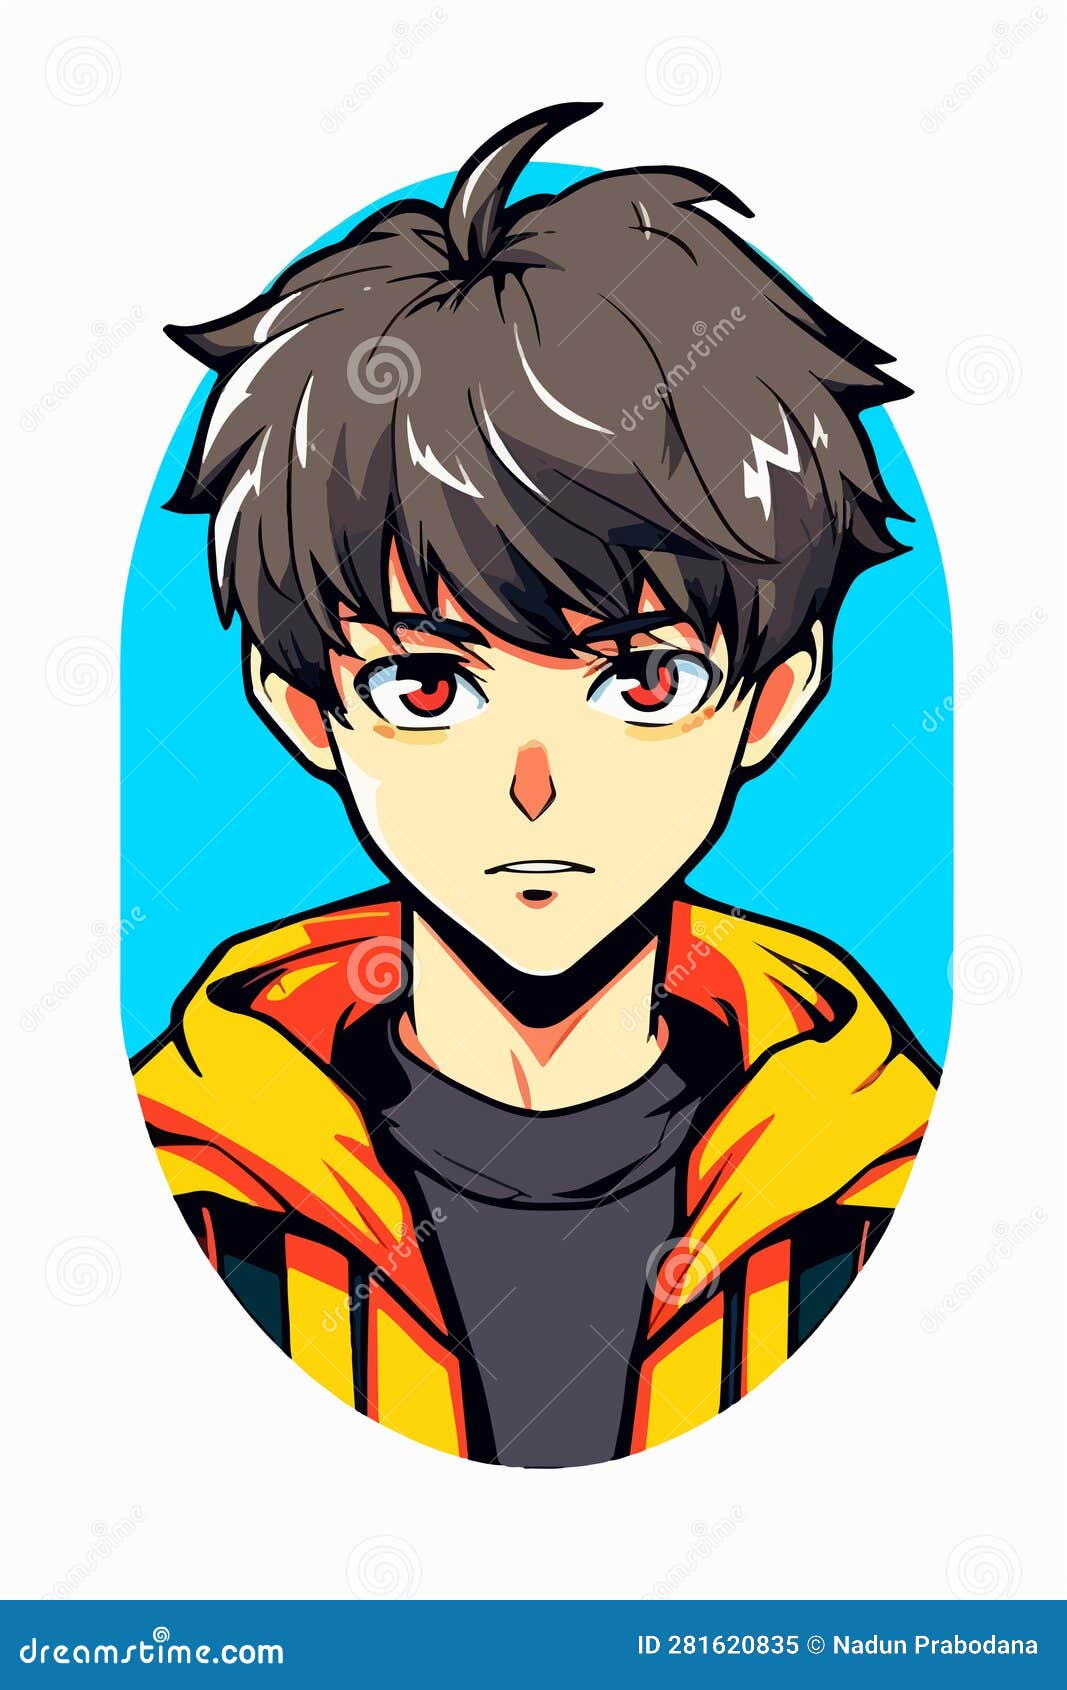 Young Man Anime Style Character Vector Illustration Design. Manga